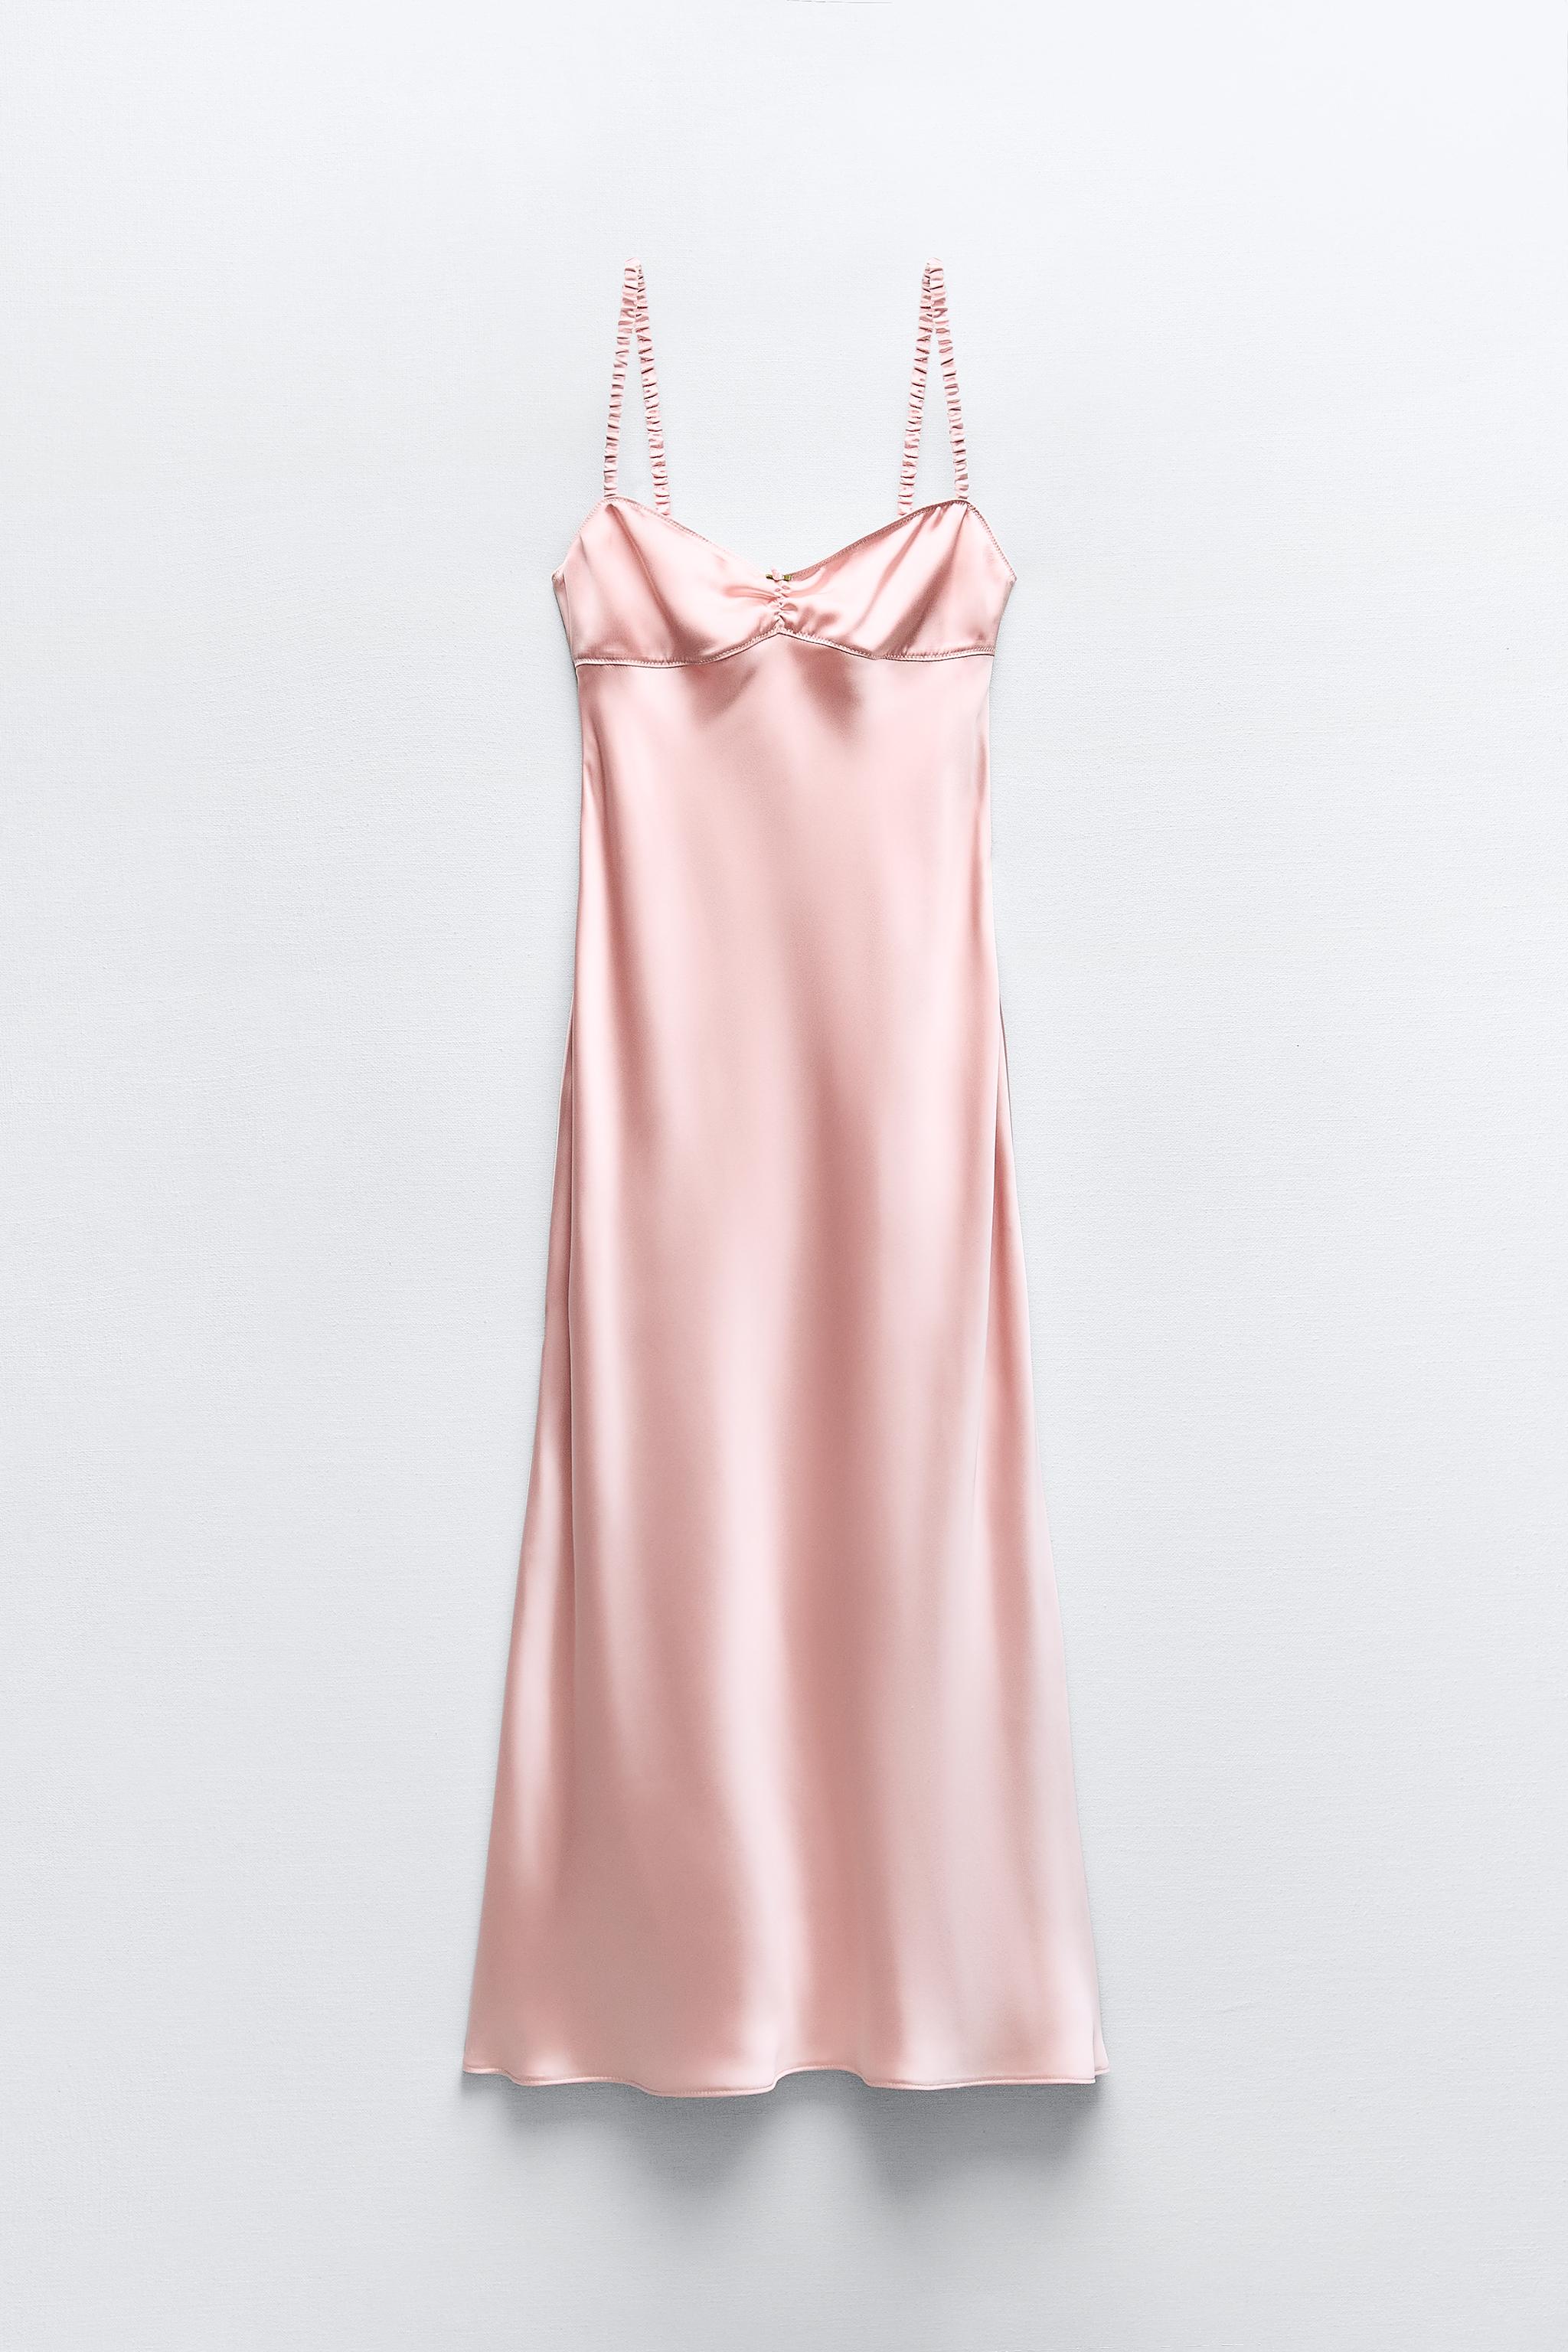 Zara Lilac Satin Floral Summer Dress – Neon Leo